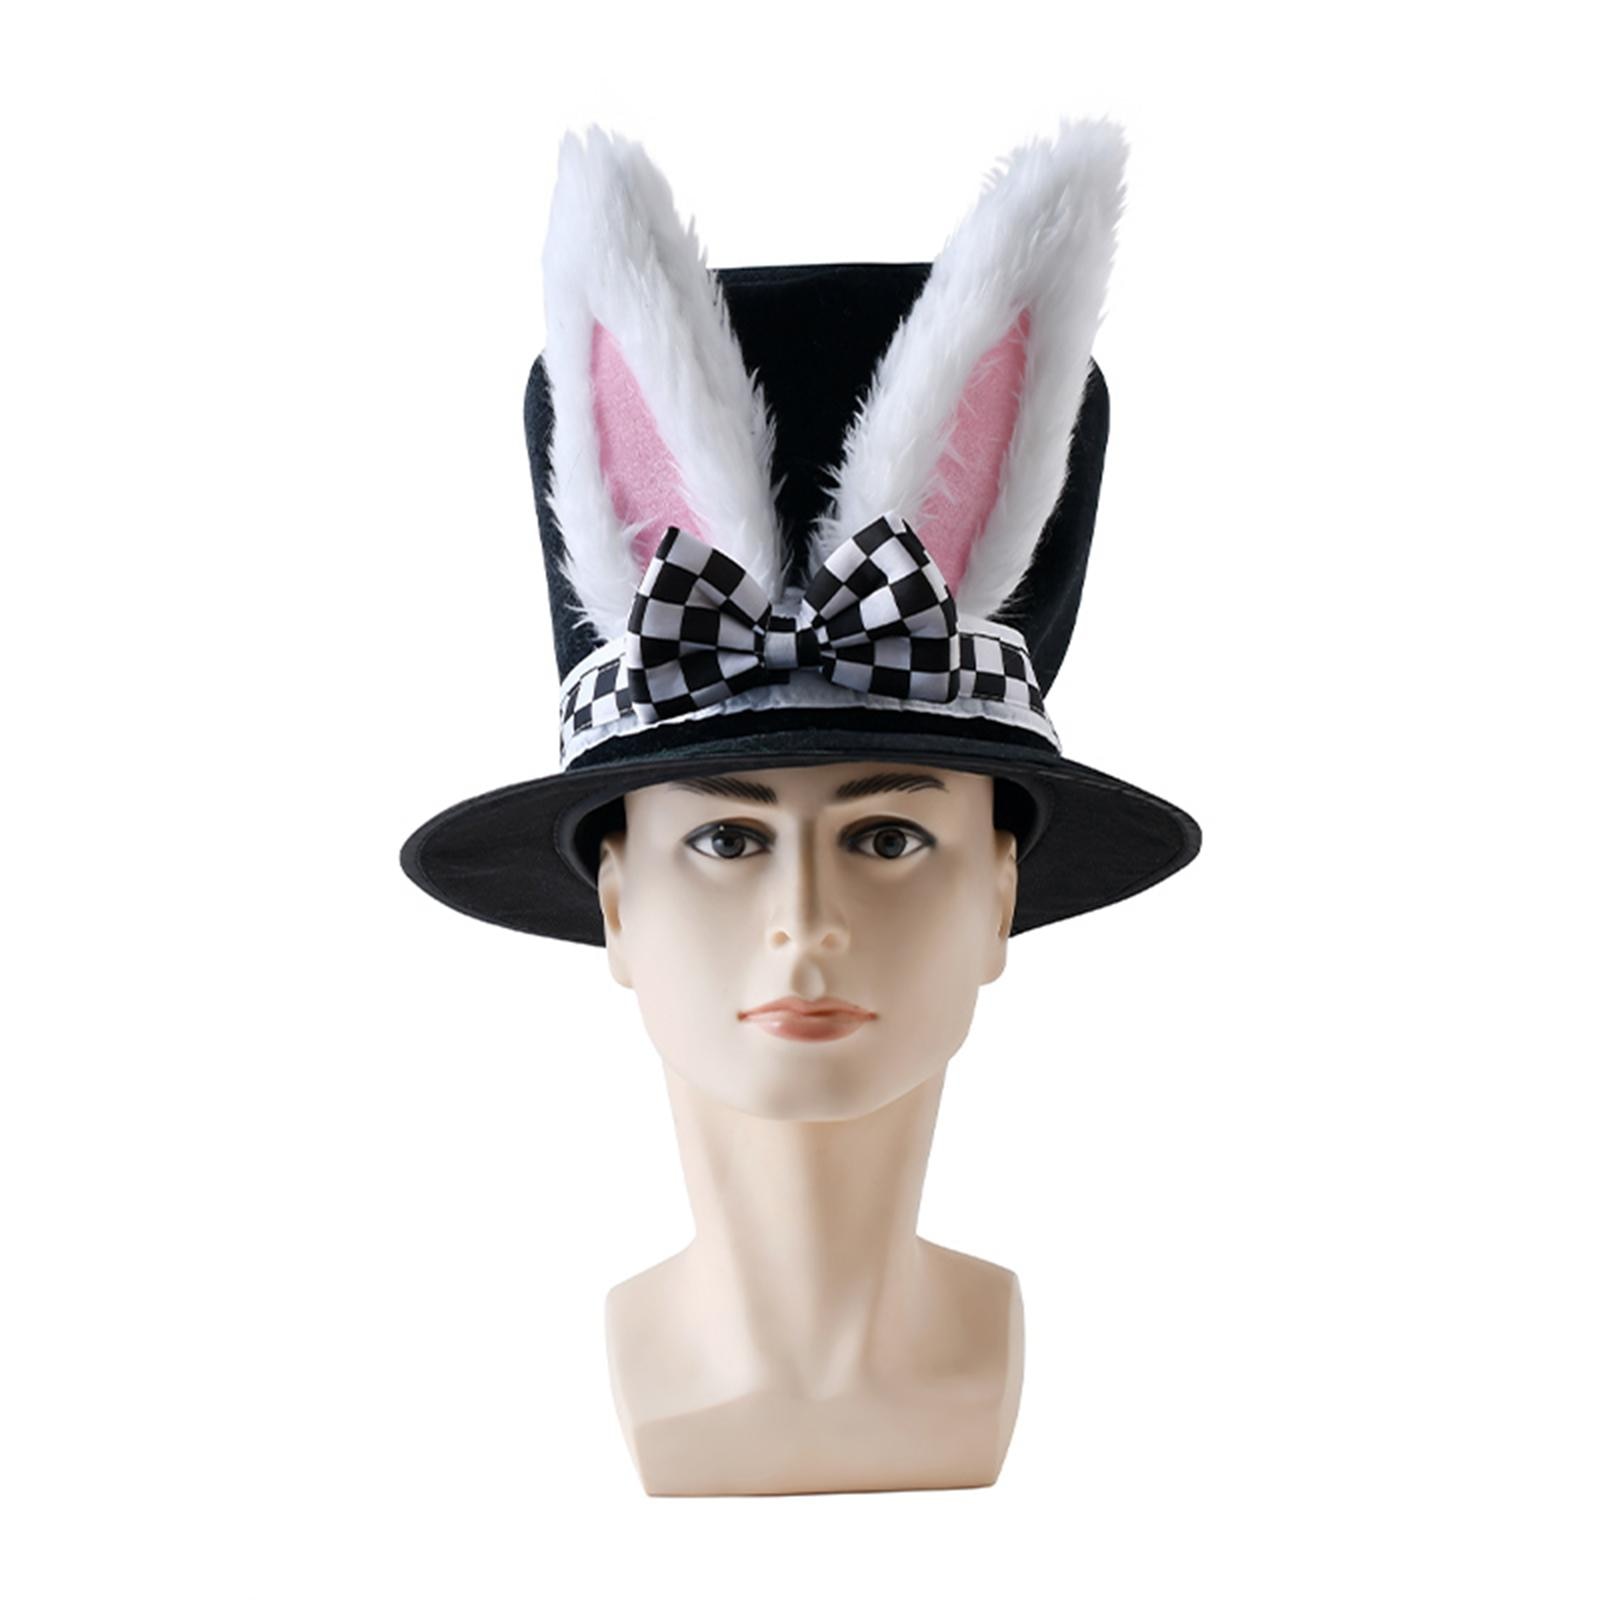 Kids Men's Adult Black Velvet Bunny Ear Top Hat Fashionable Premium Quality Decorations Costume Holiday Hat Comfortable Cute